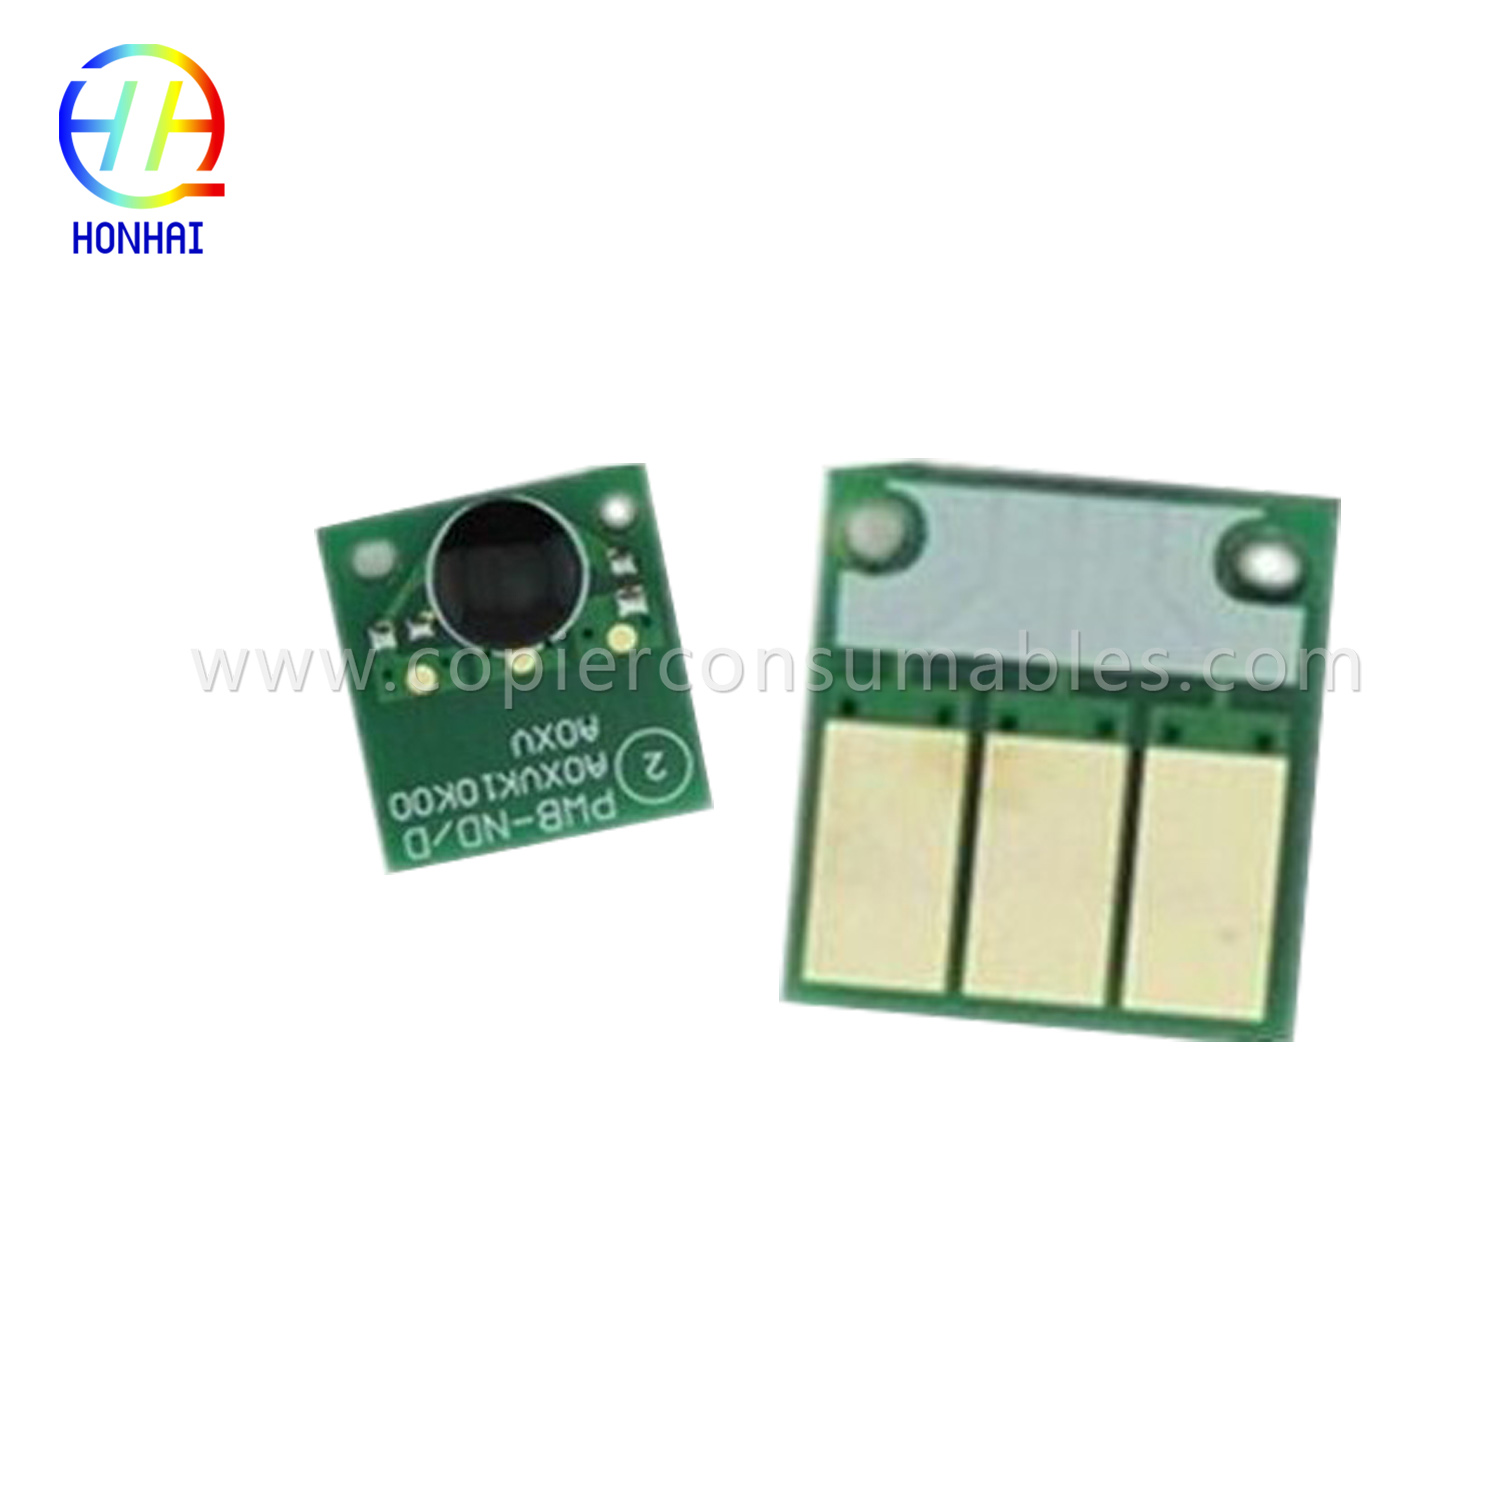 Toner cartridge Chip alang sa Konica Minolta C220 C280 C360.jpg-1 拷贝